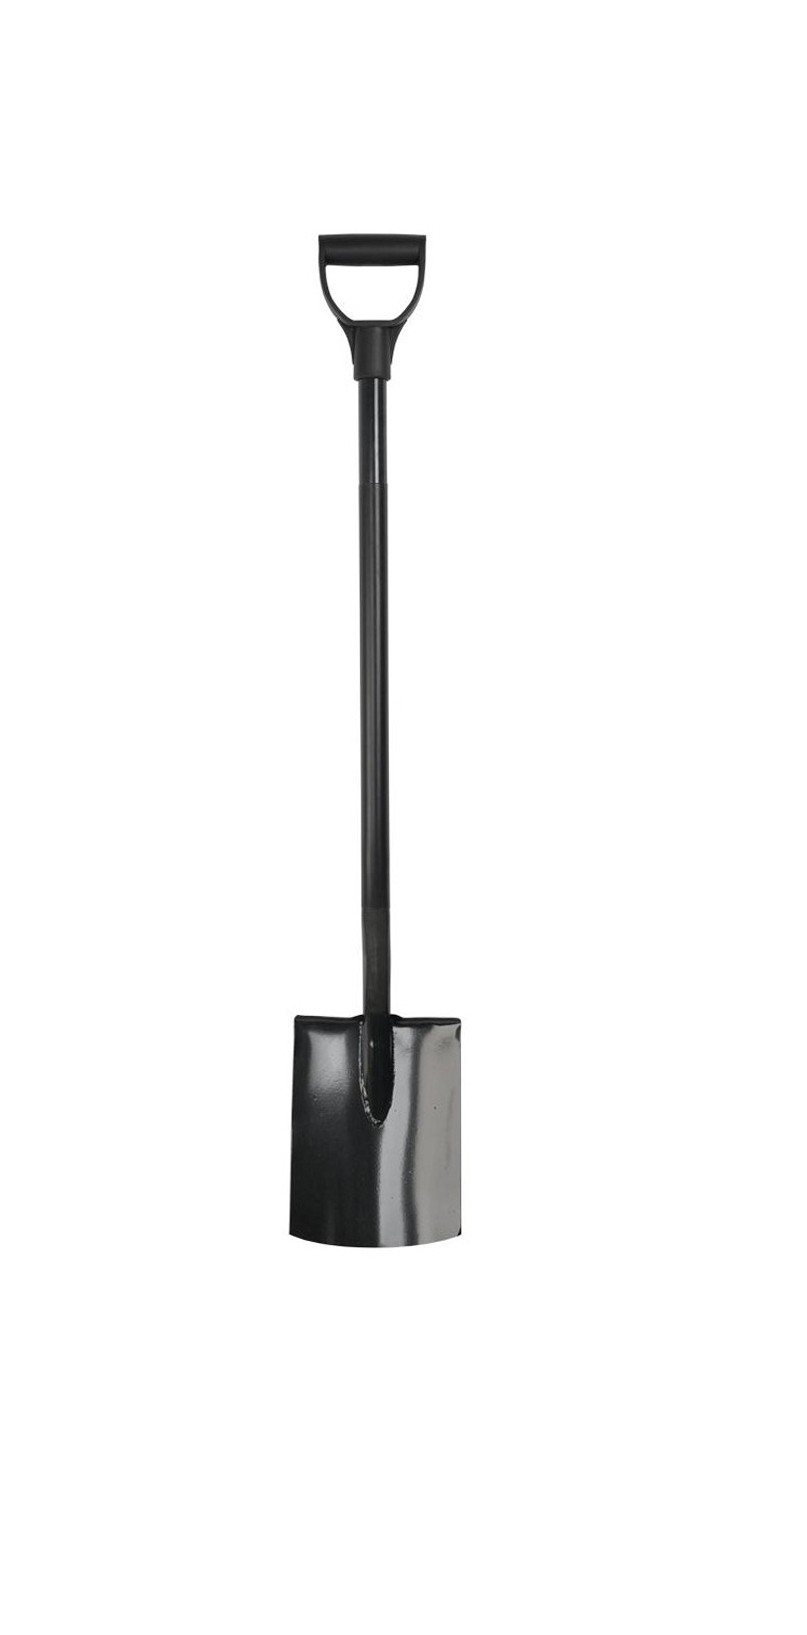 Лопата Neo Tools 95-005 в интернет-магазине, главное фото